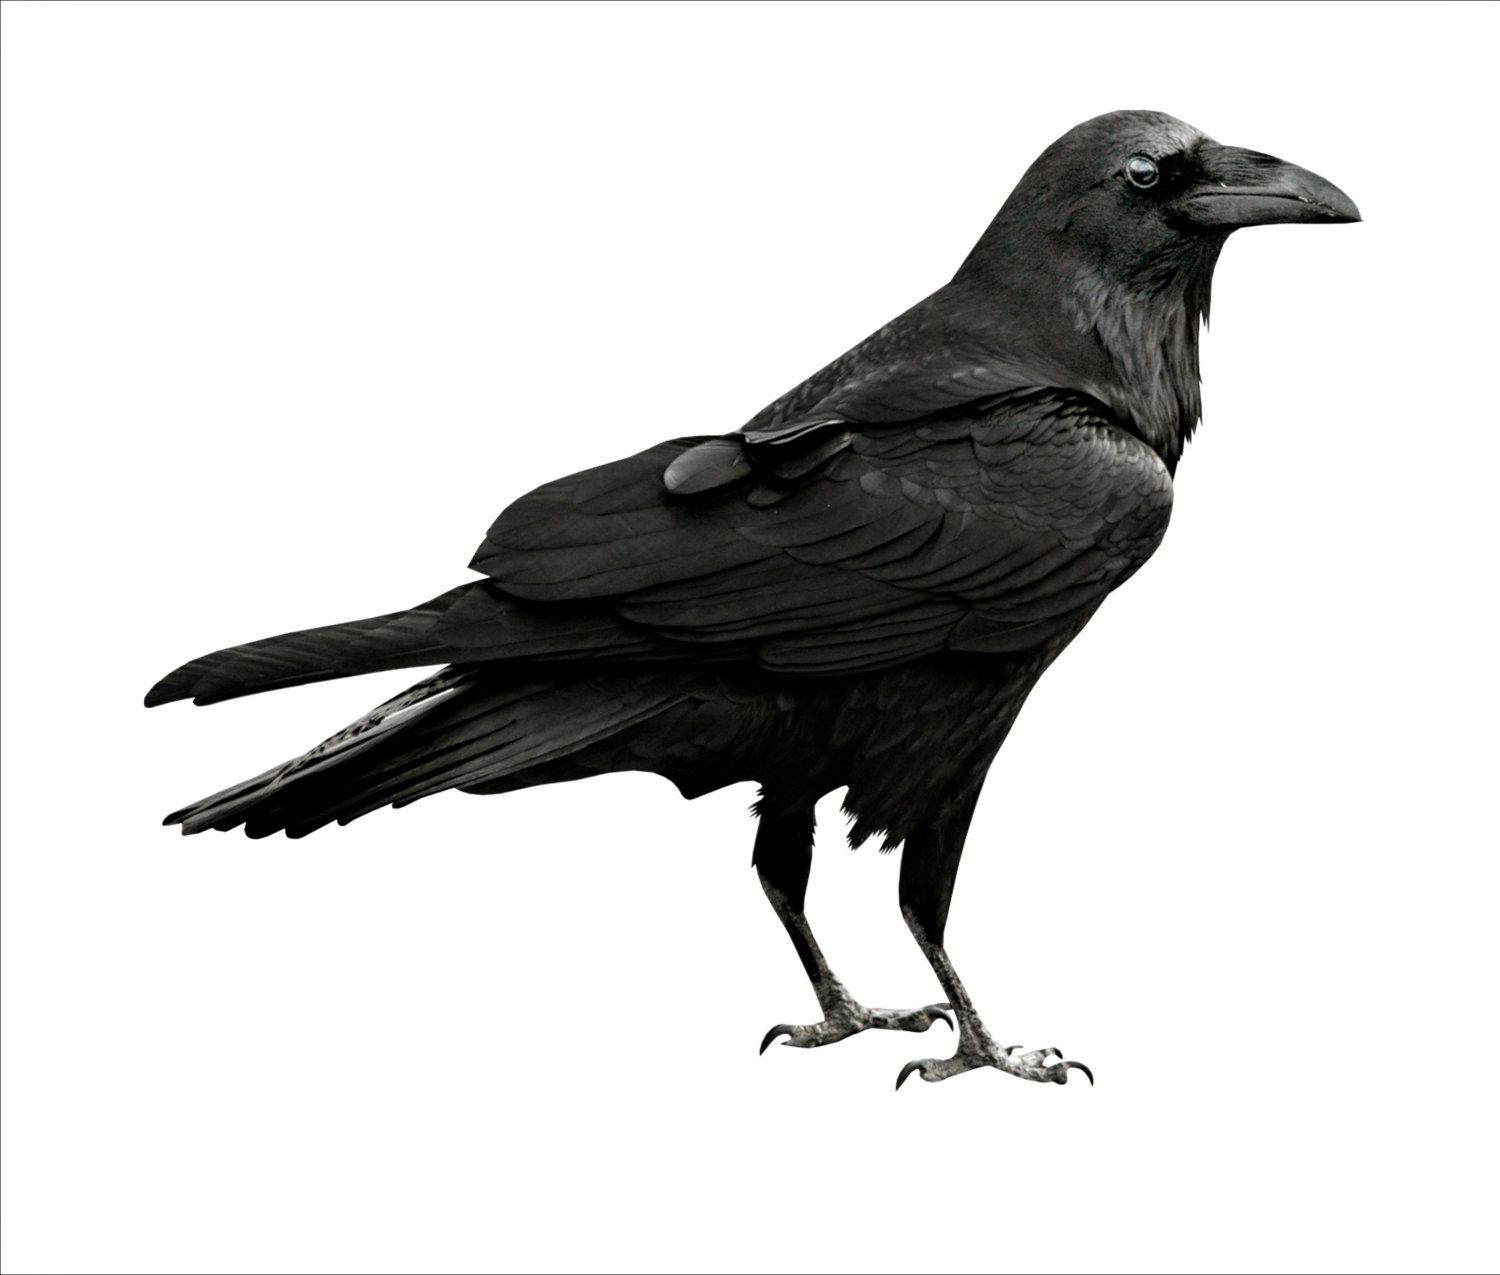 Black bird image.